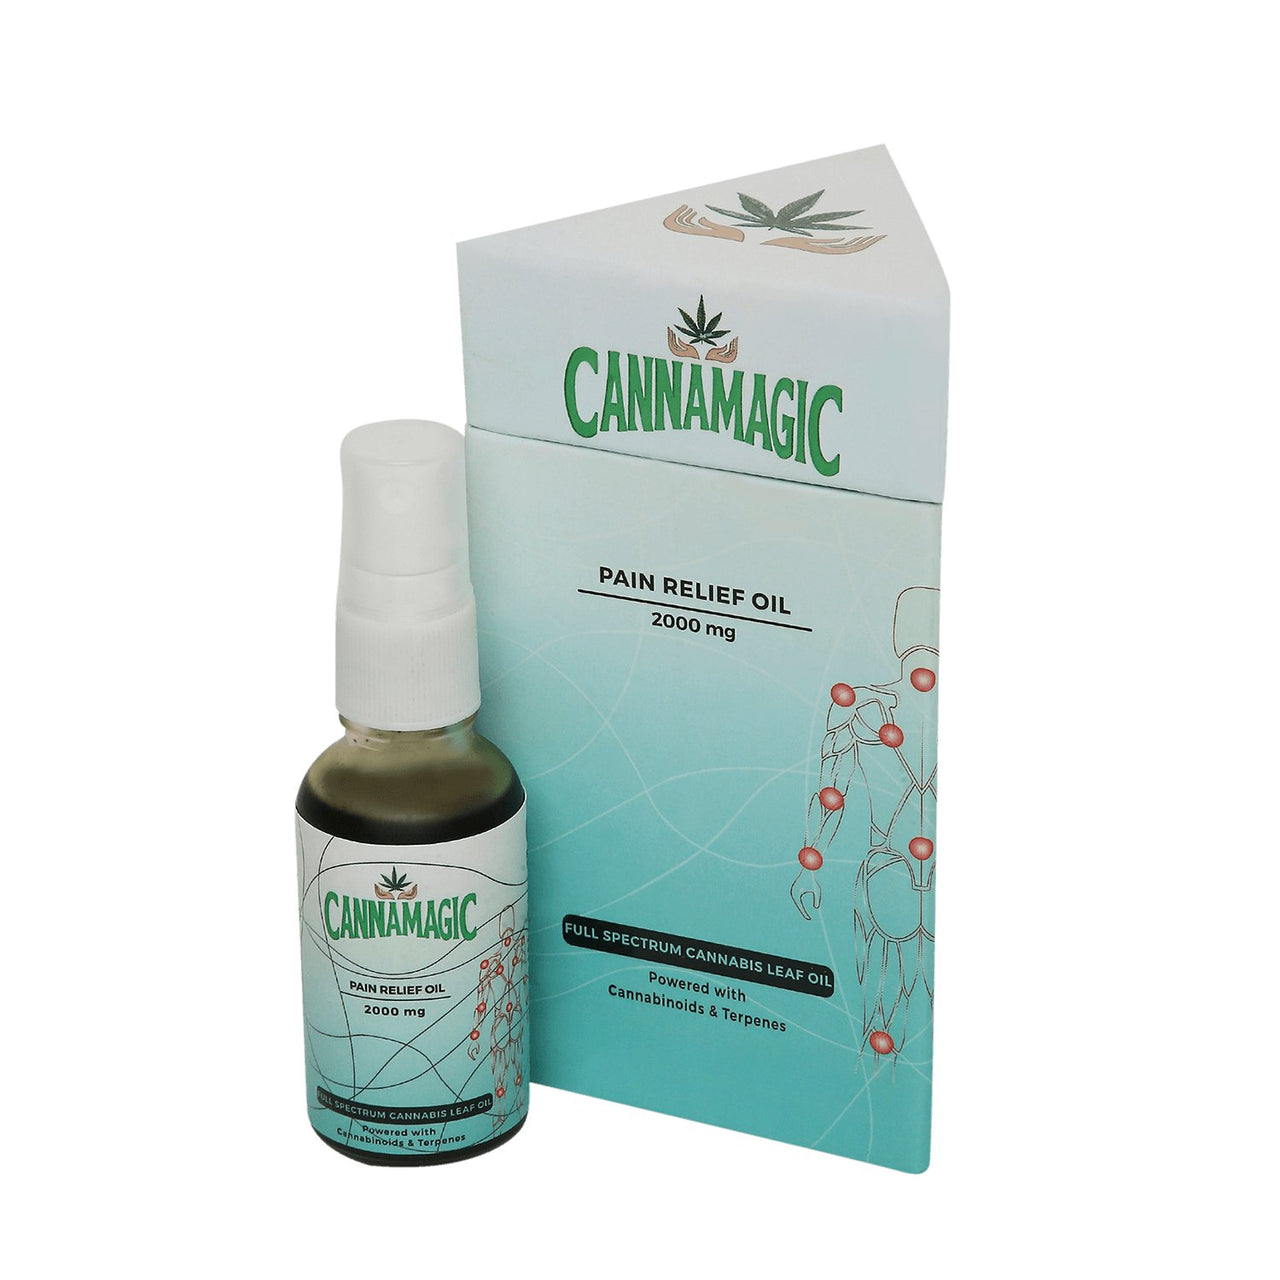 Cannamagic - Pain Relief Oil 2000mg - Full Spectrum Cannabis Leaf Oil - CBD Store India